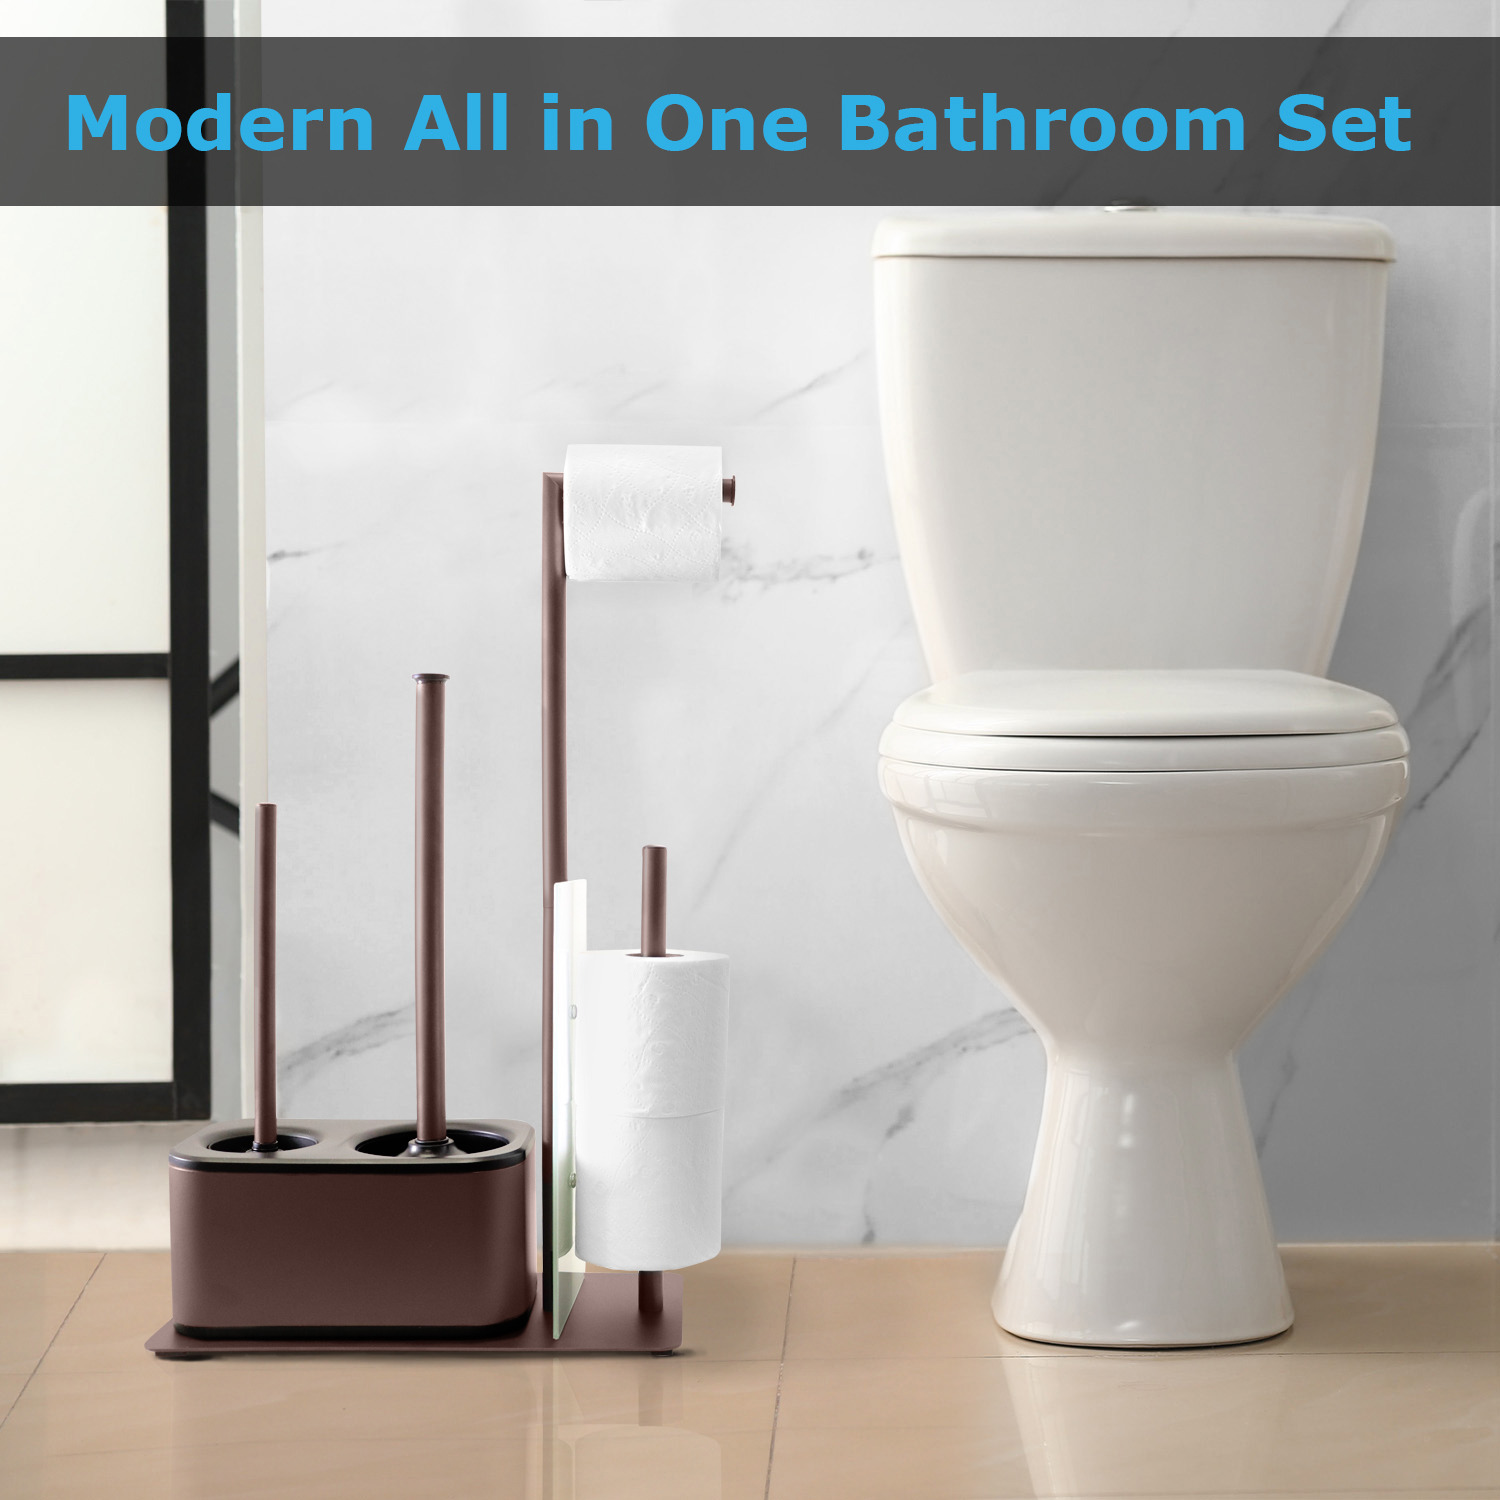 All in one toilet brush, plunger toilet paper holder Bath Set bronze